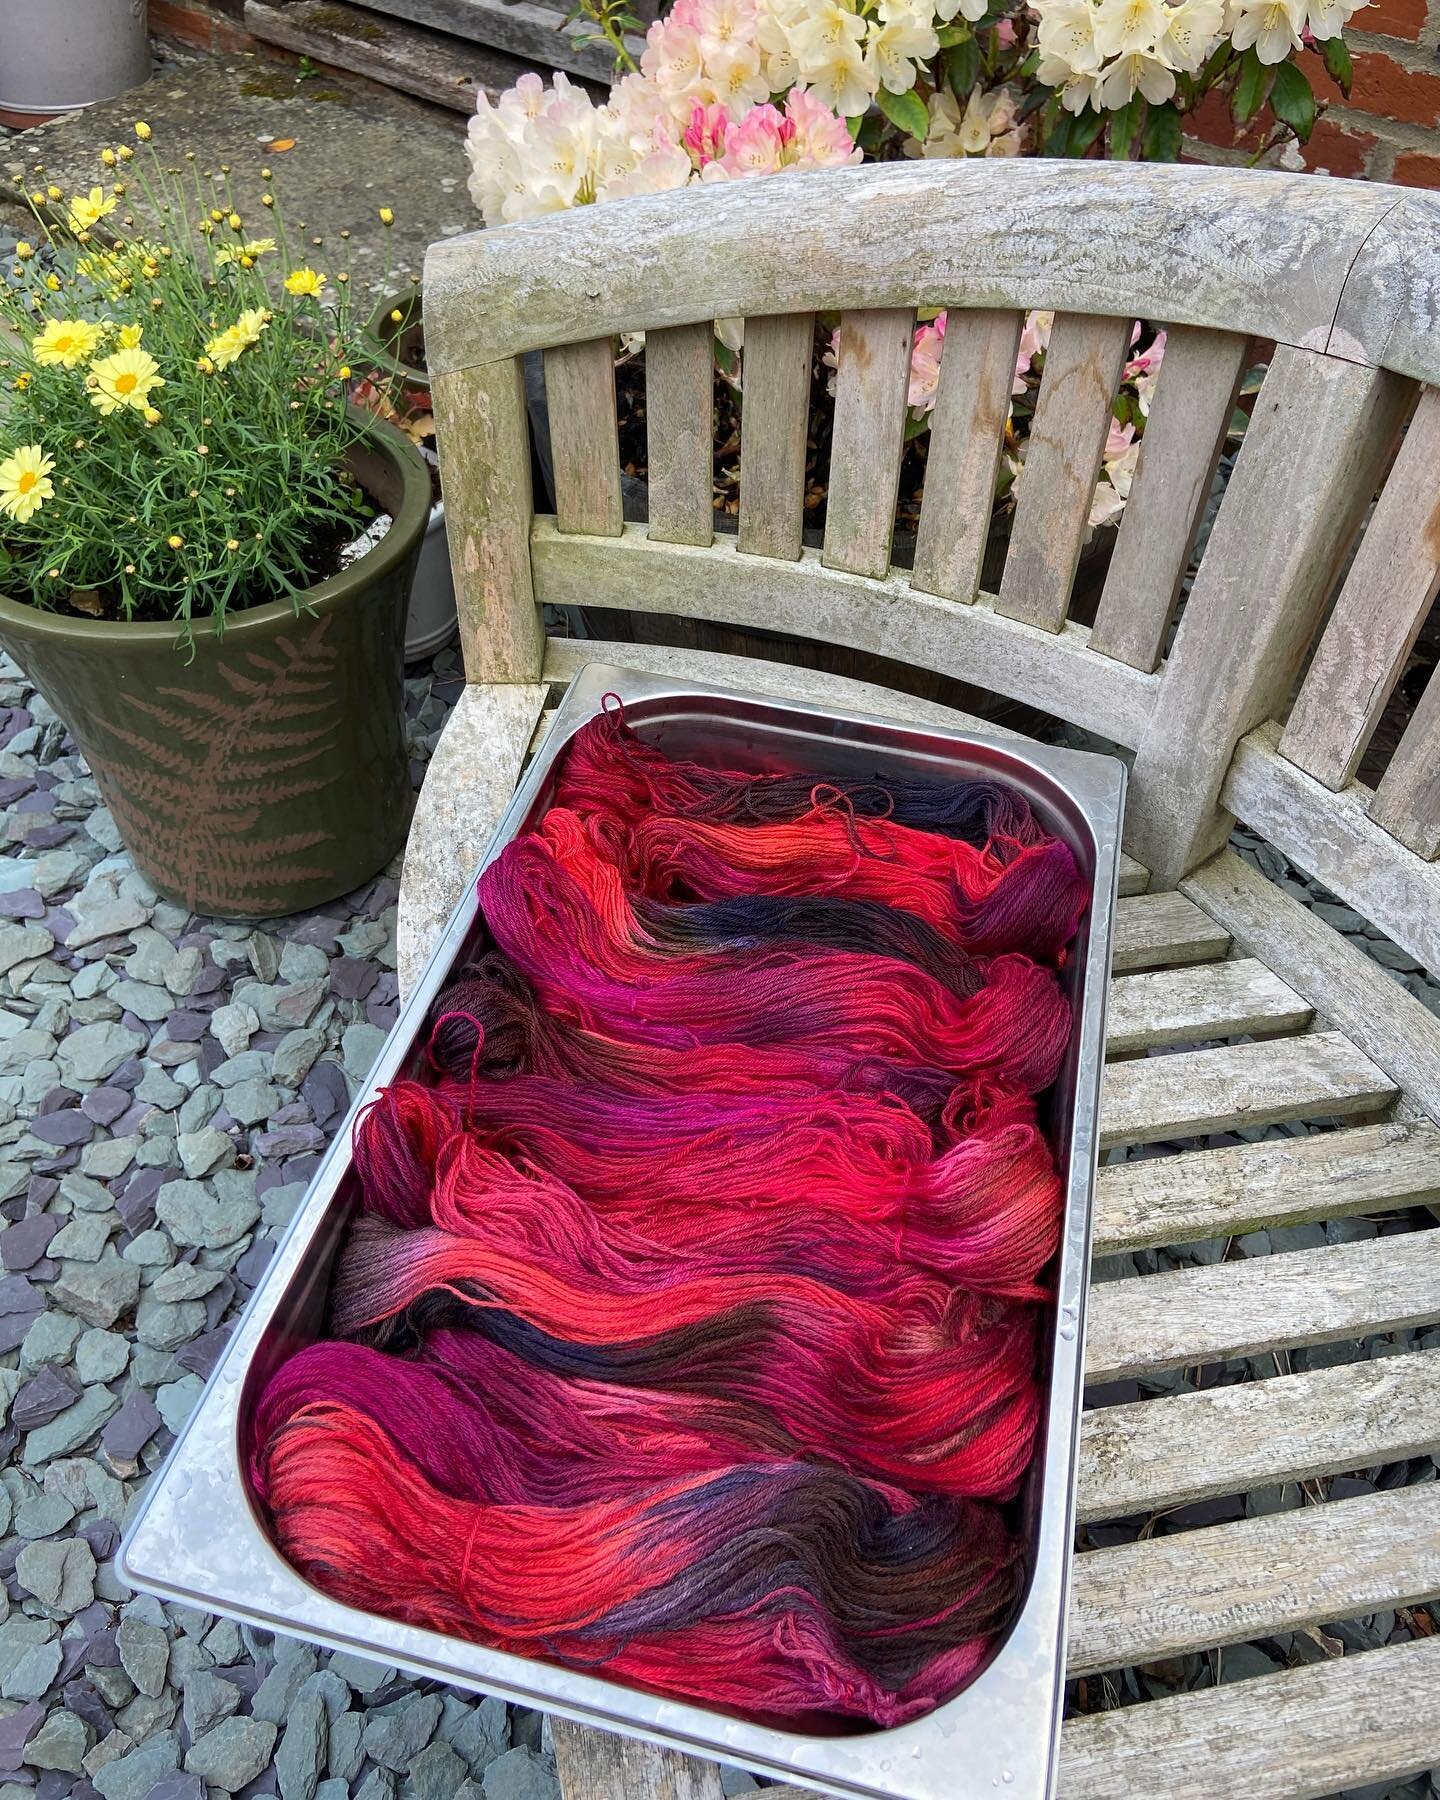 A new batch of Carminella has now landed. It&rsquo;s just drying and will be in store tomorrow. #yarnstore #yarn #yarnlove #yarnaddict #yarnlover #yarnspirations #yarnsnob #yarnsofinstagram #knittersofinstagram #knitting #knittingaddict #knittinginsp